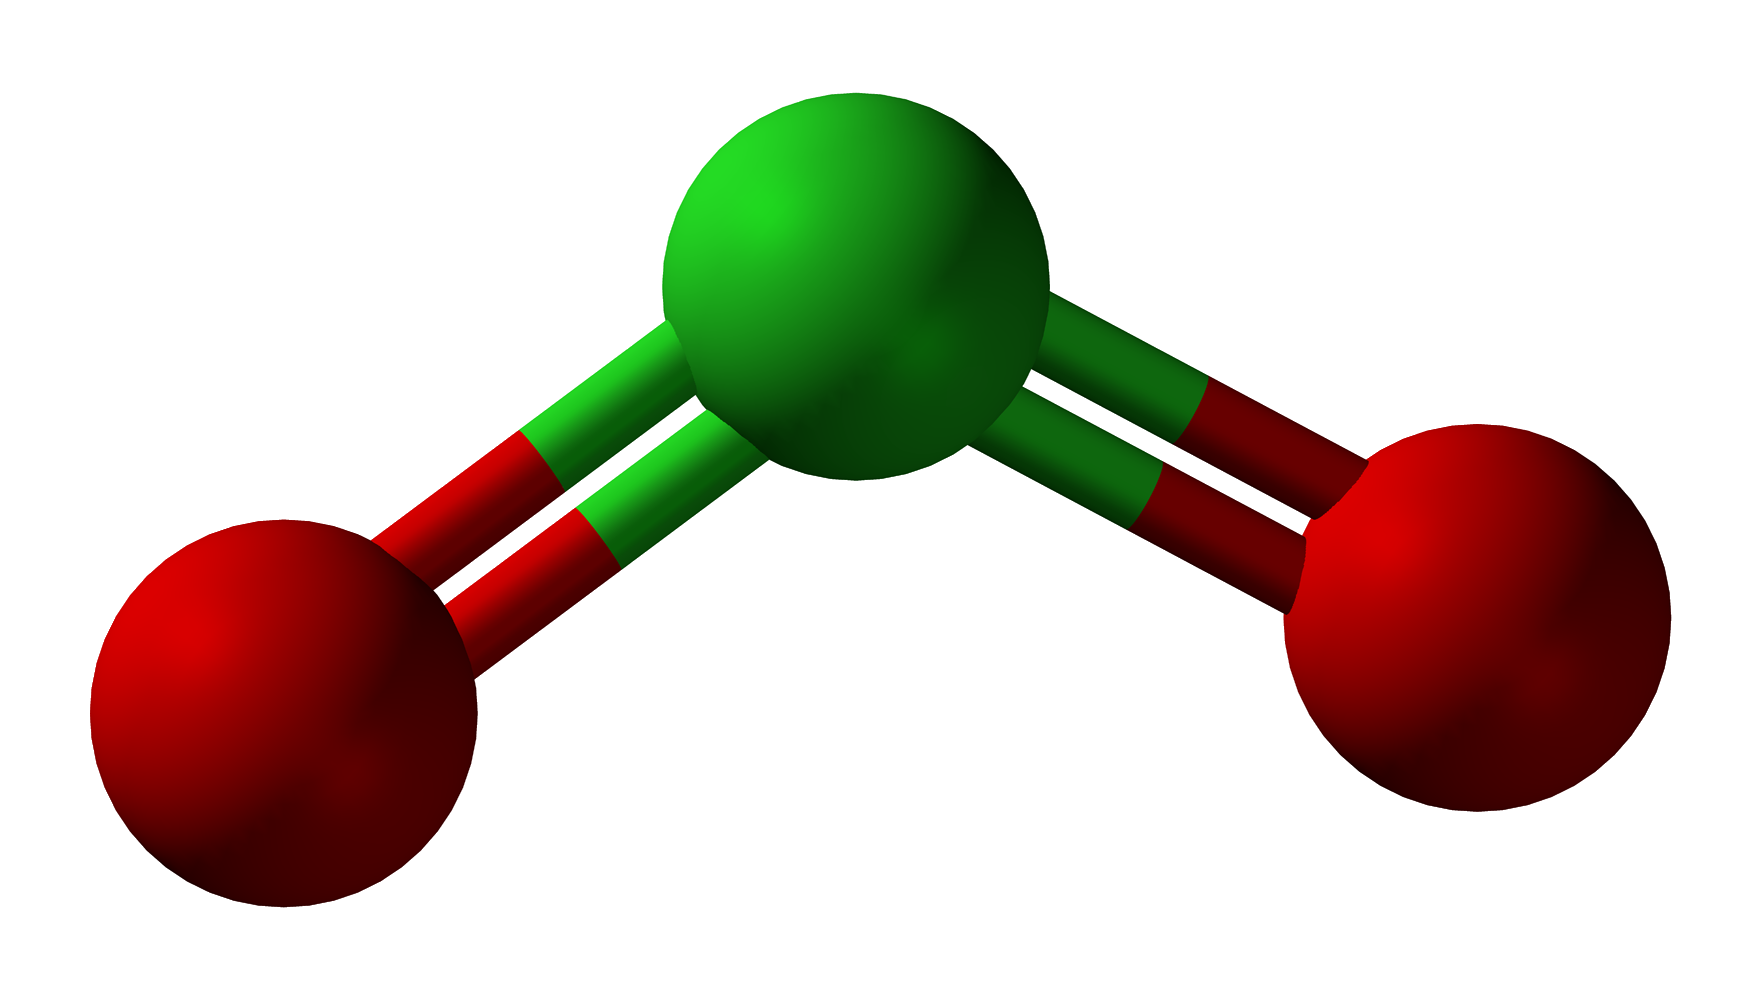 8 молекул серы. Диоксид серы (so2). Модель молекулы сернистого газаso2. Модель молекулы оксида серы 4. Диоксид серы so2 (сернистый ангидрид).